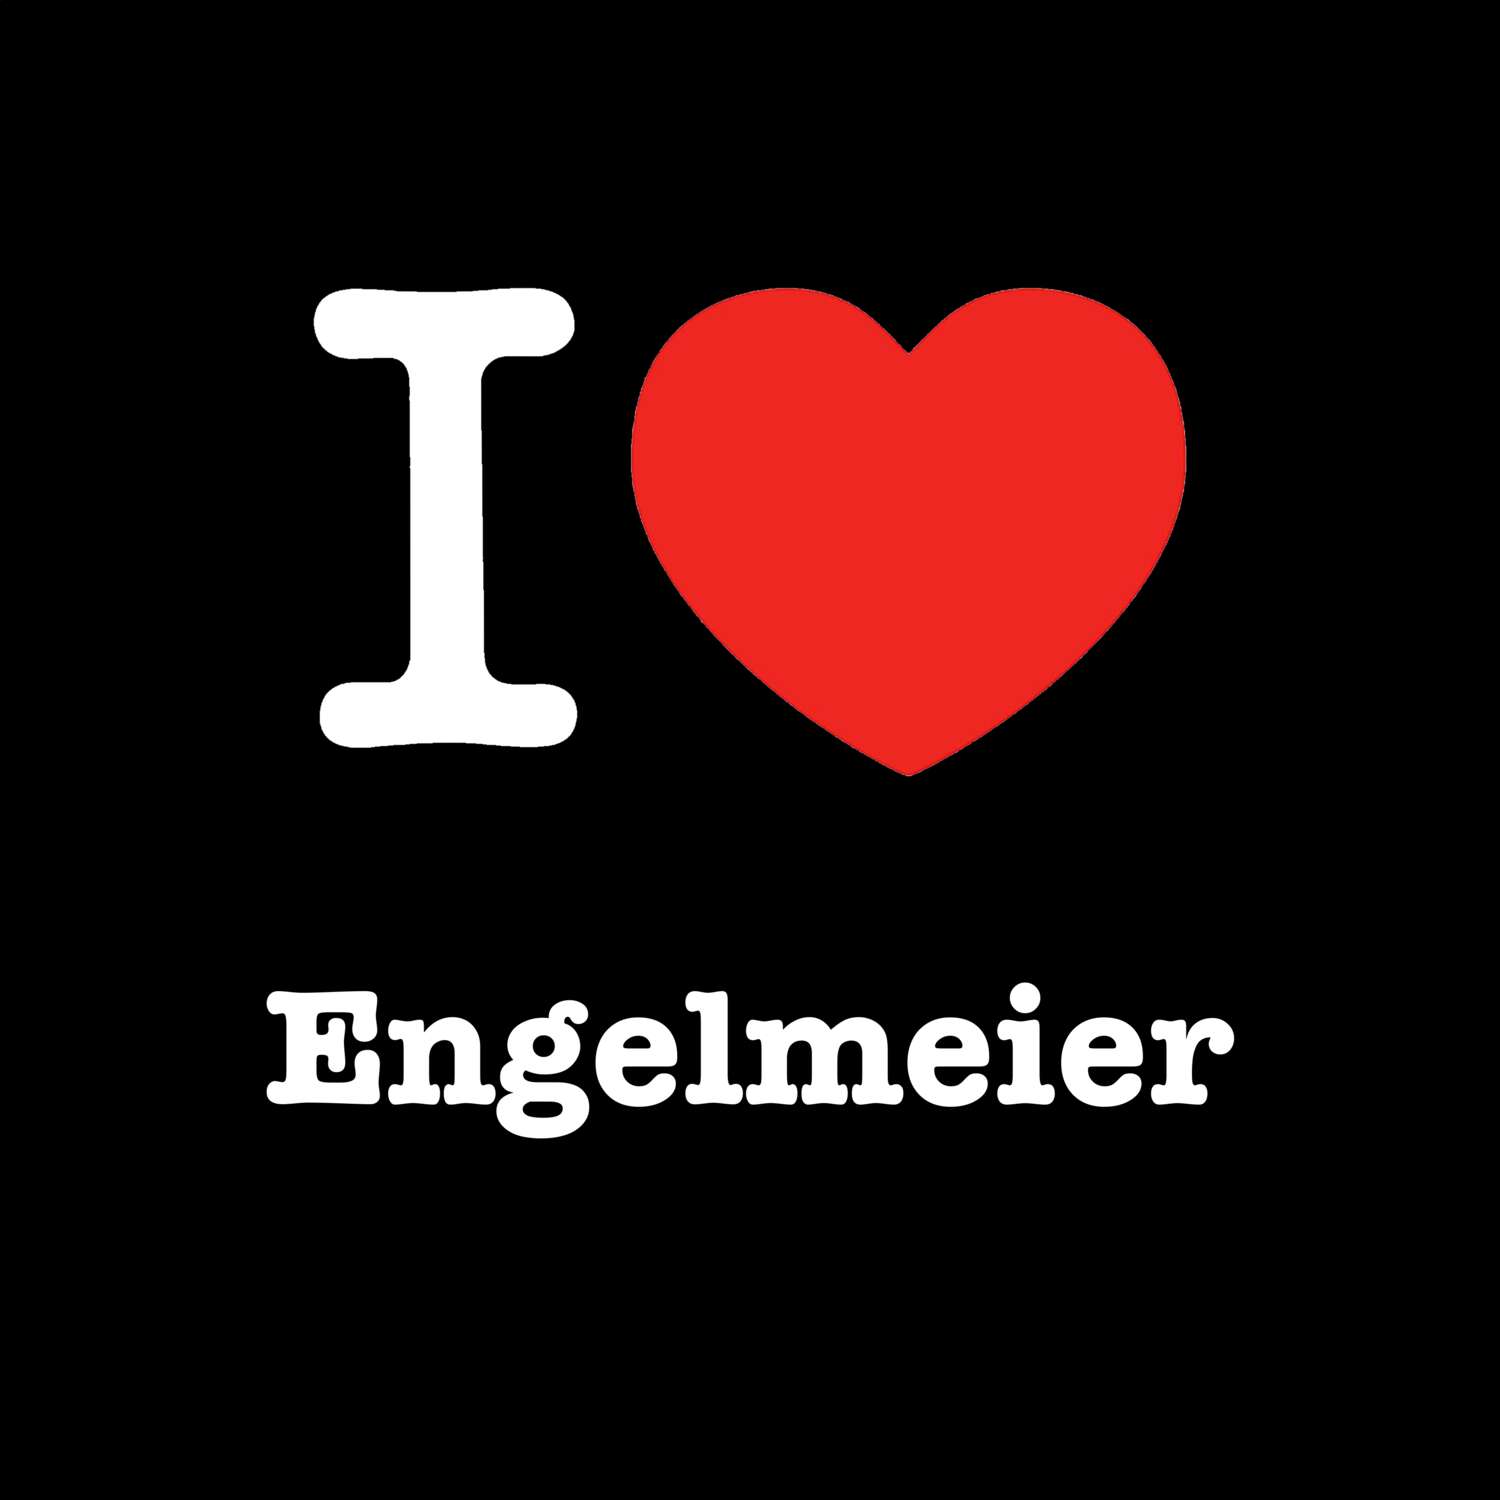 Engelmeier T-Shirt »I love«